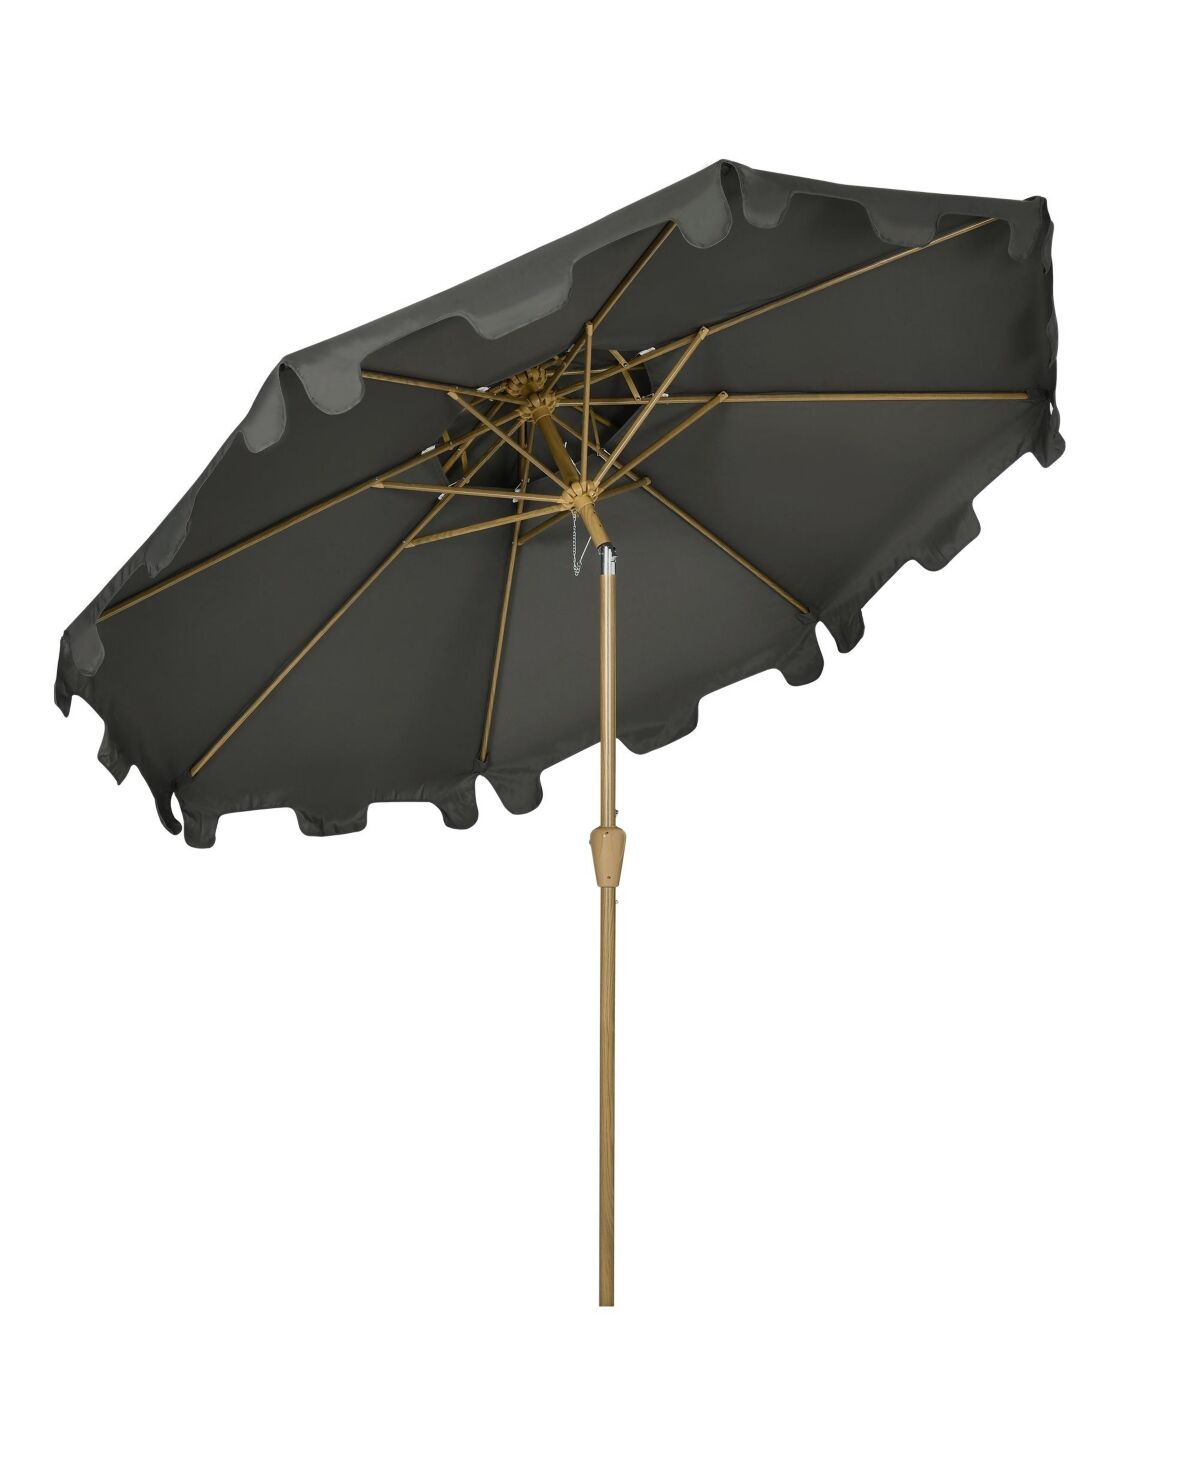 Outsunny 9' Patio Umbrella with Push Button Tilt and Crank, Double Top Ruffled Outdoor Market Table Umbrella with 8 Ribs, for Garden, Deck, Pool, Gray